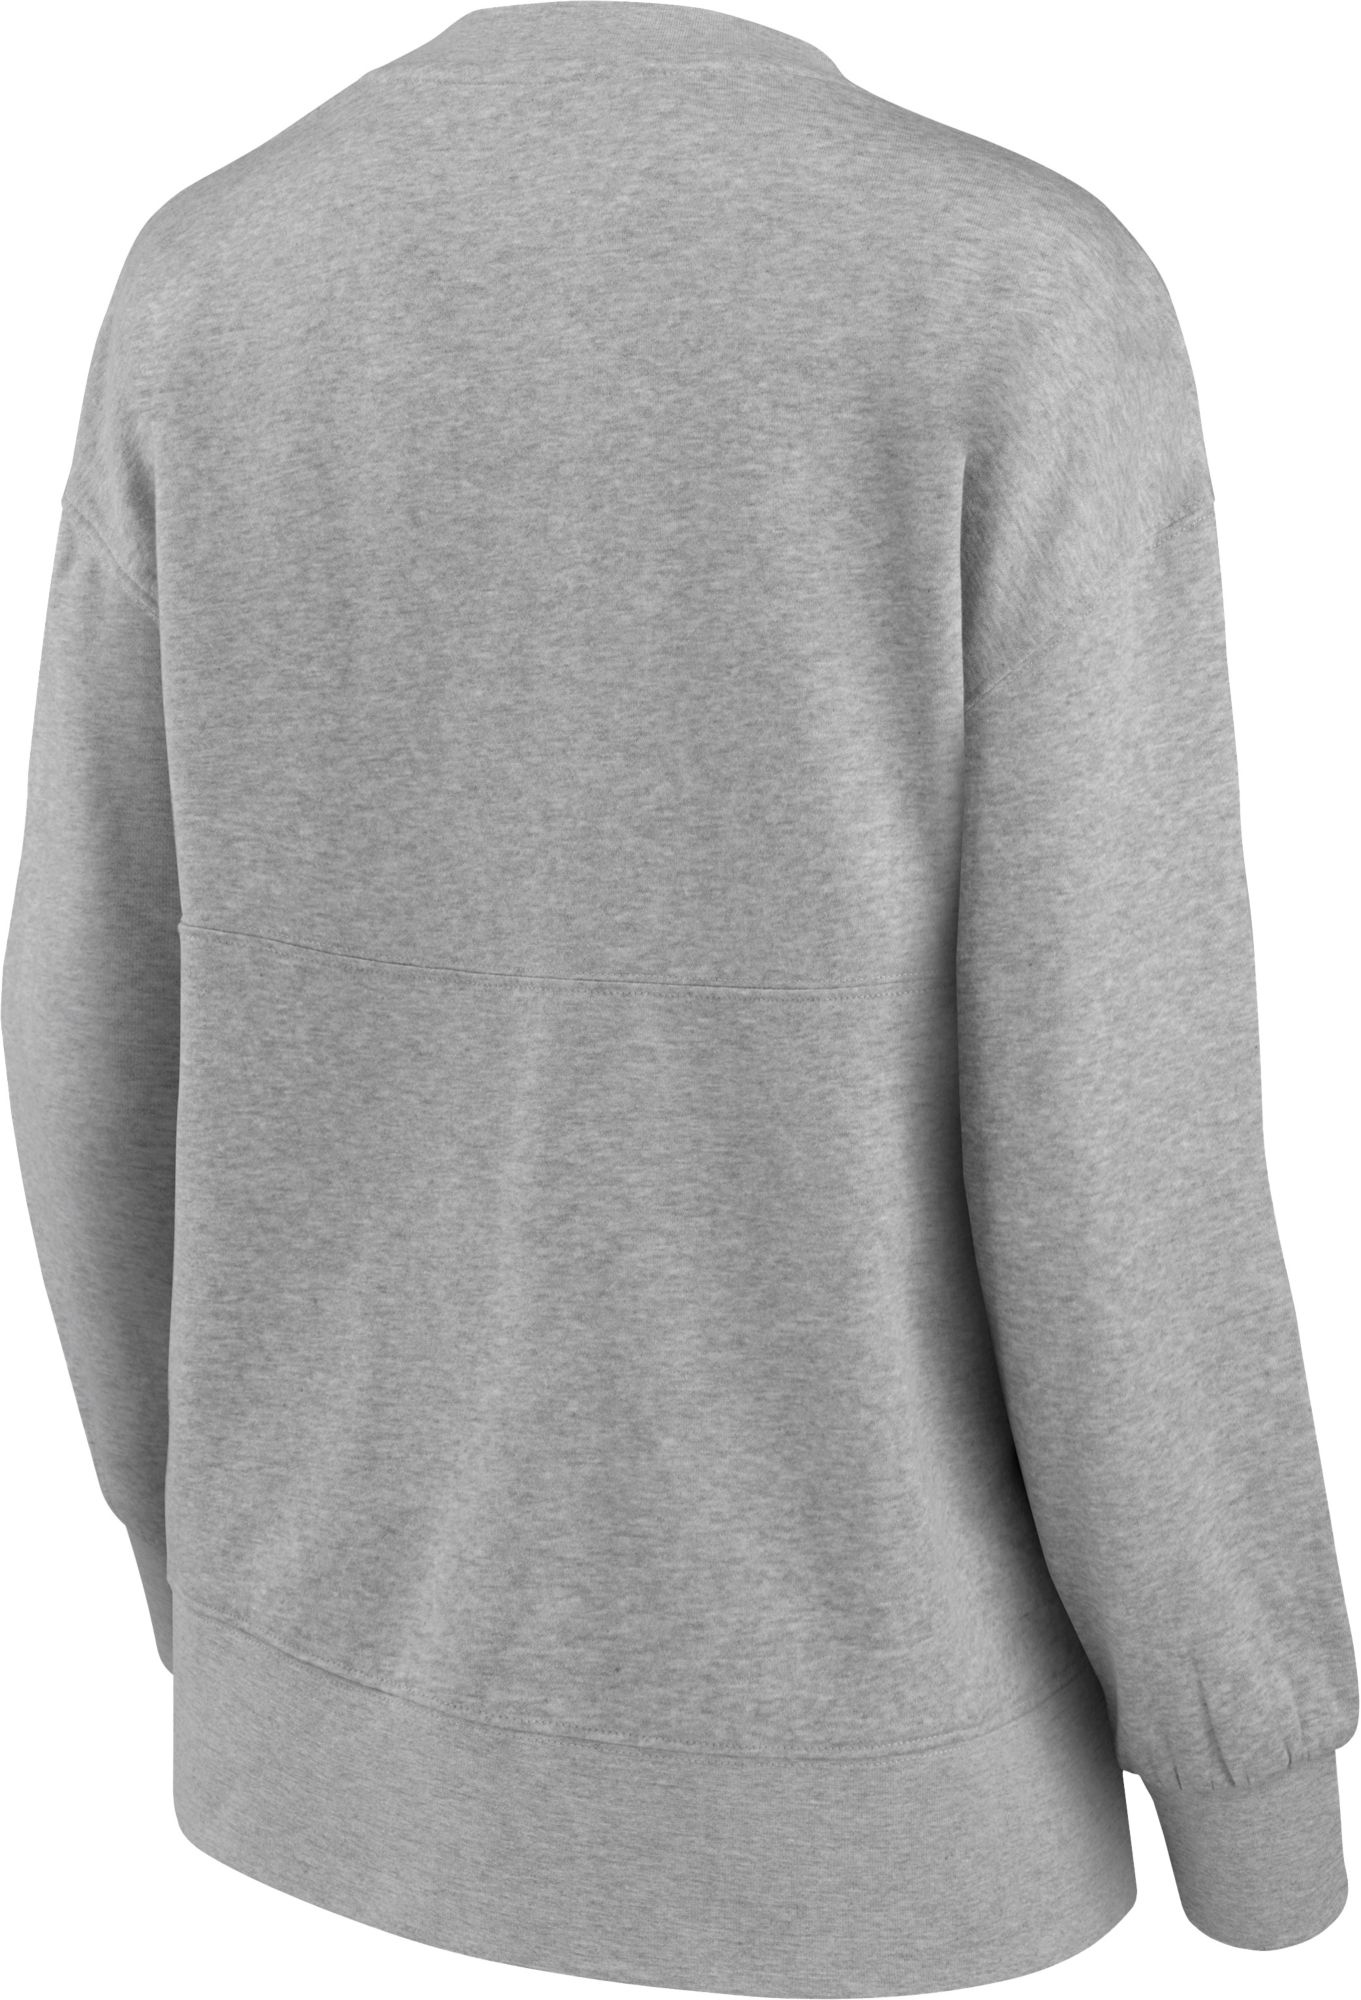 NCAA Women's Minnesota Golden Gophers Grey Fleece Pullover Crewneck Sweater